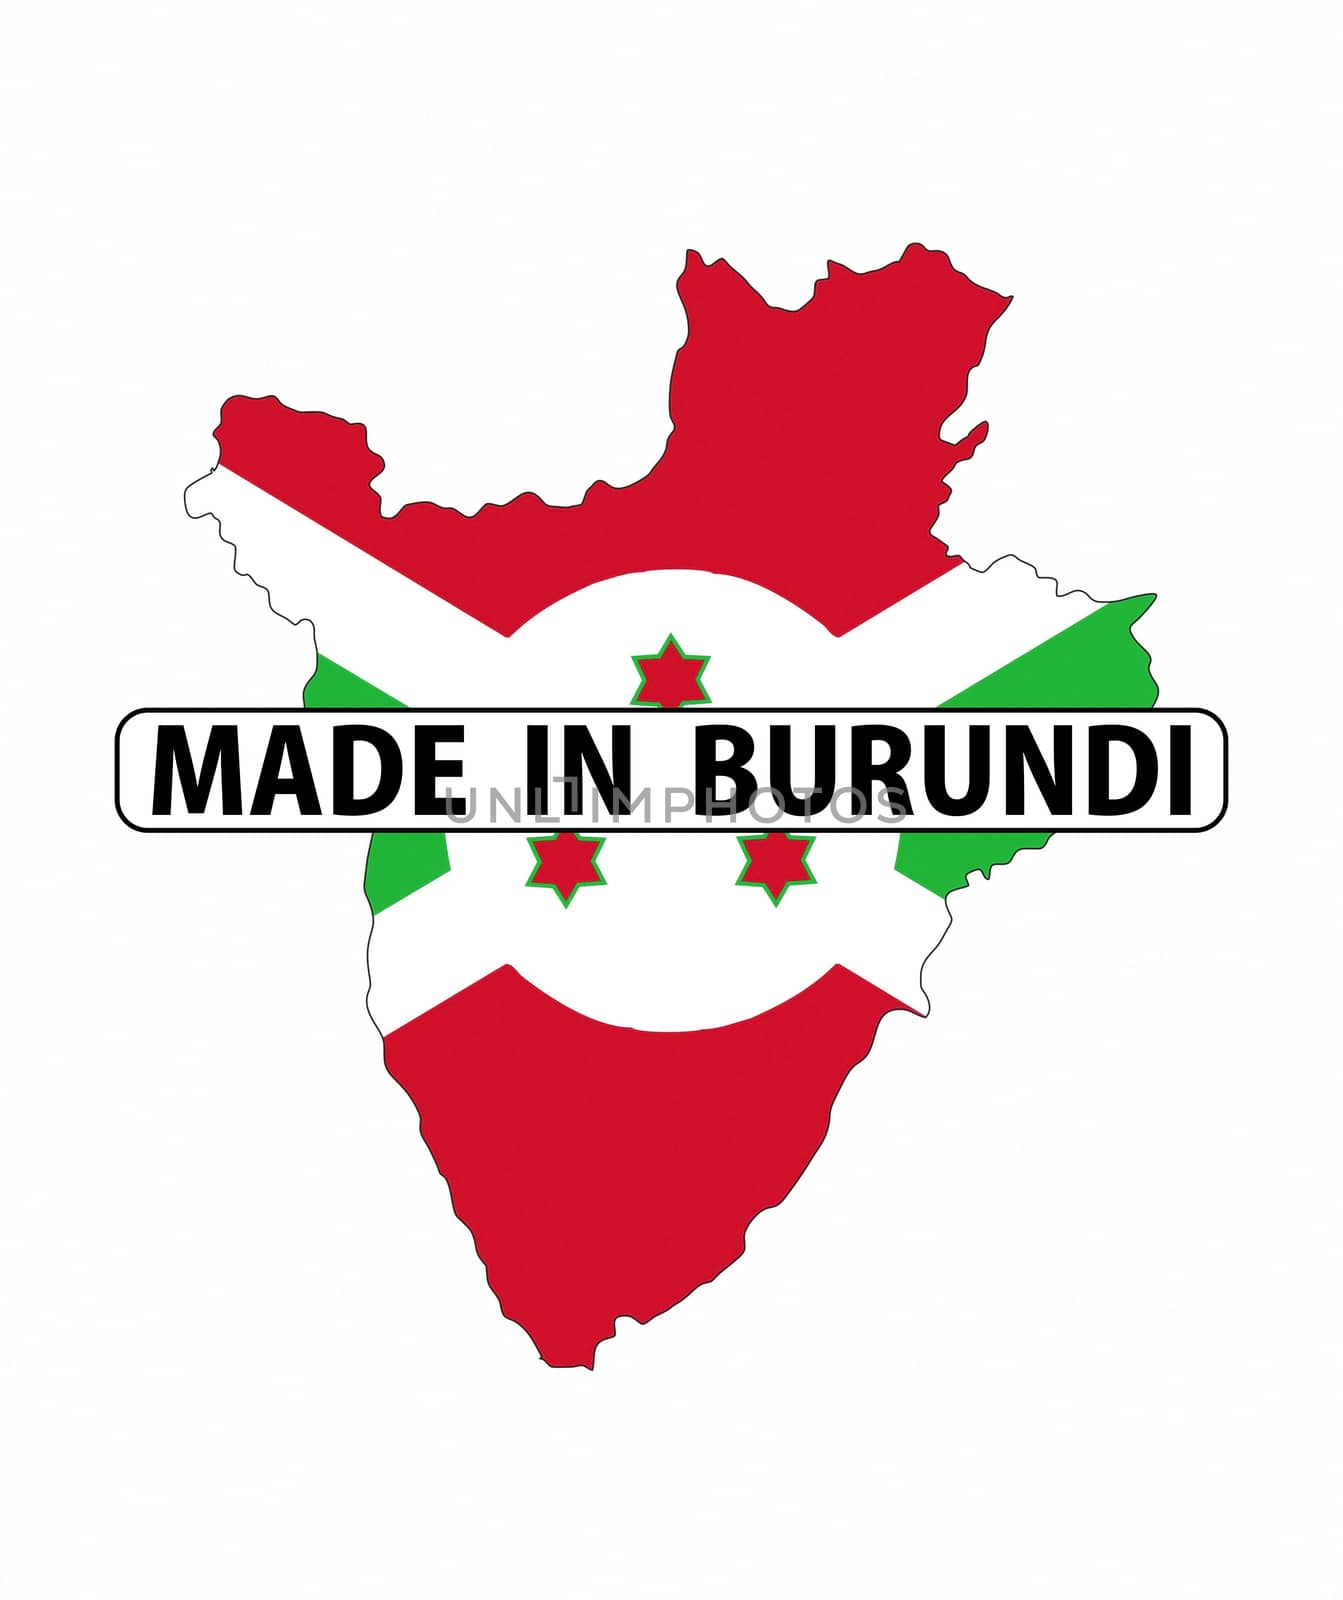 made in burundi by tony4urban